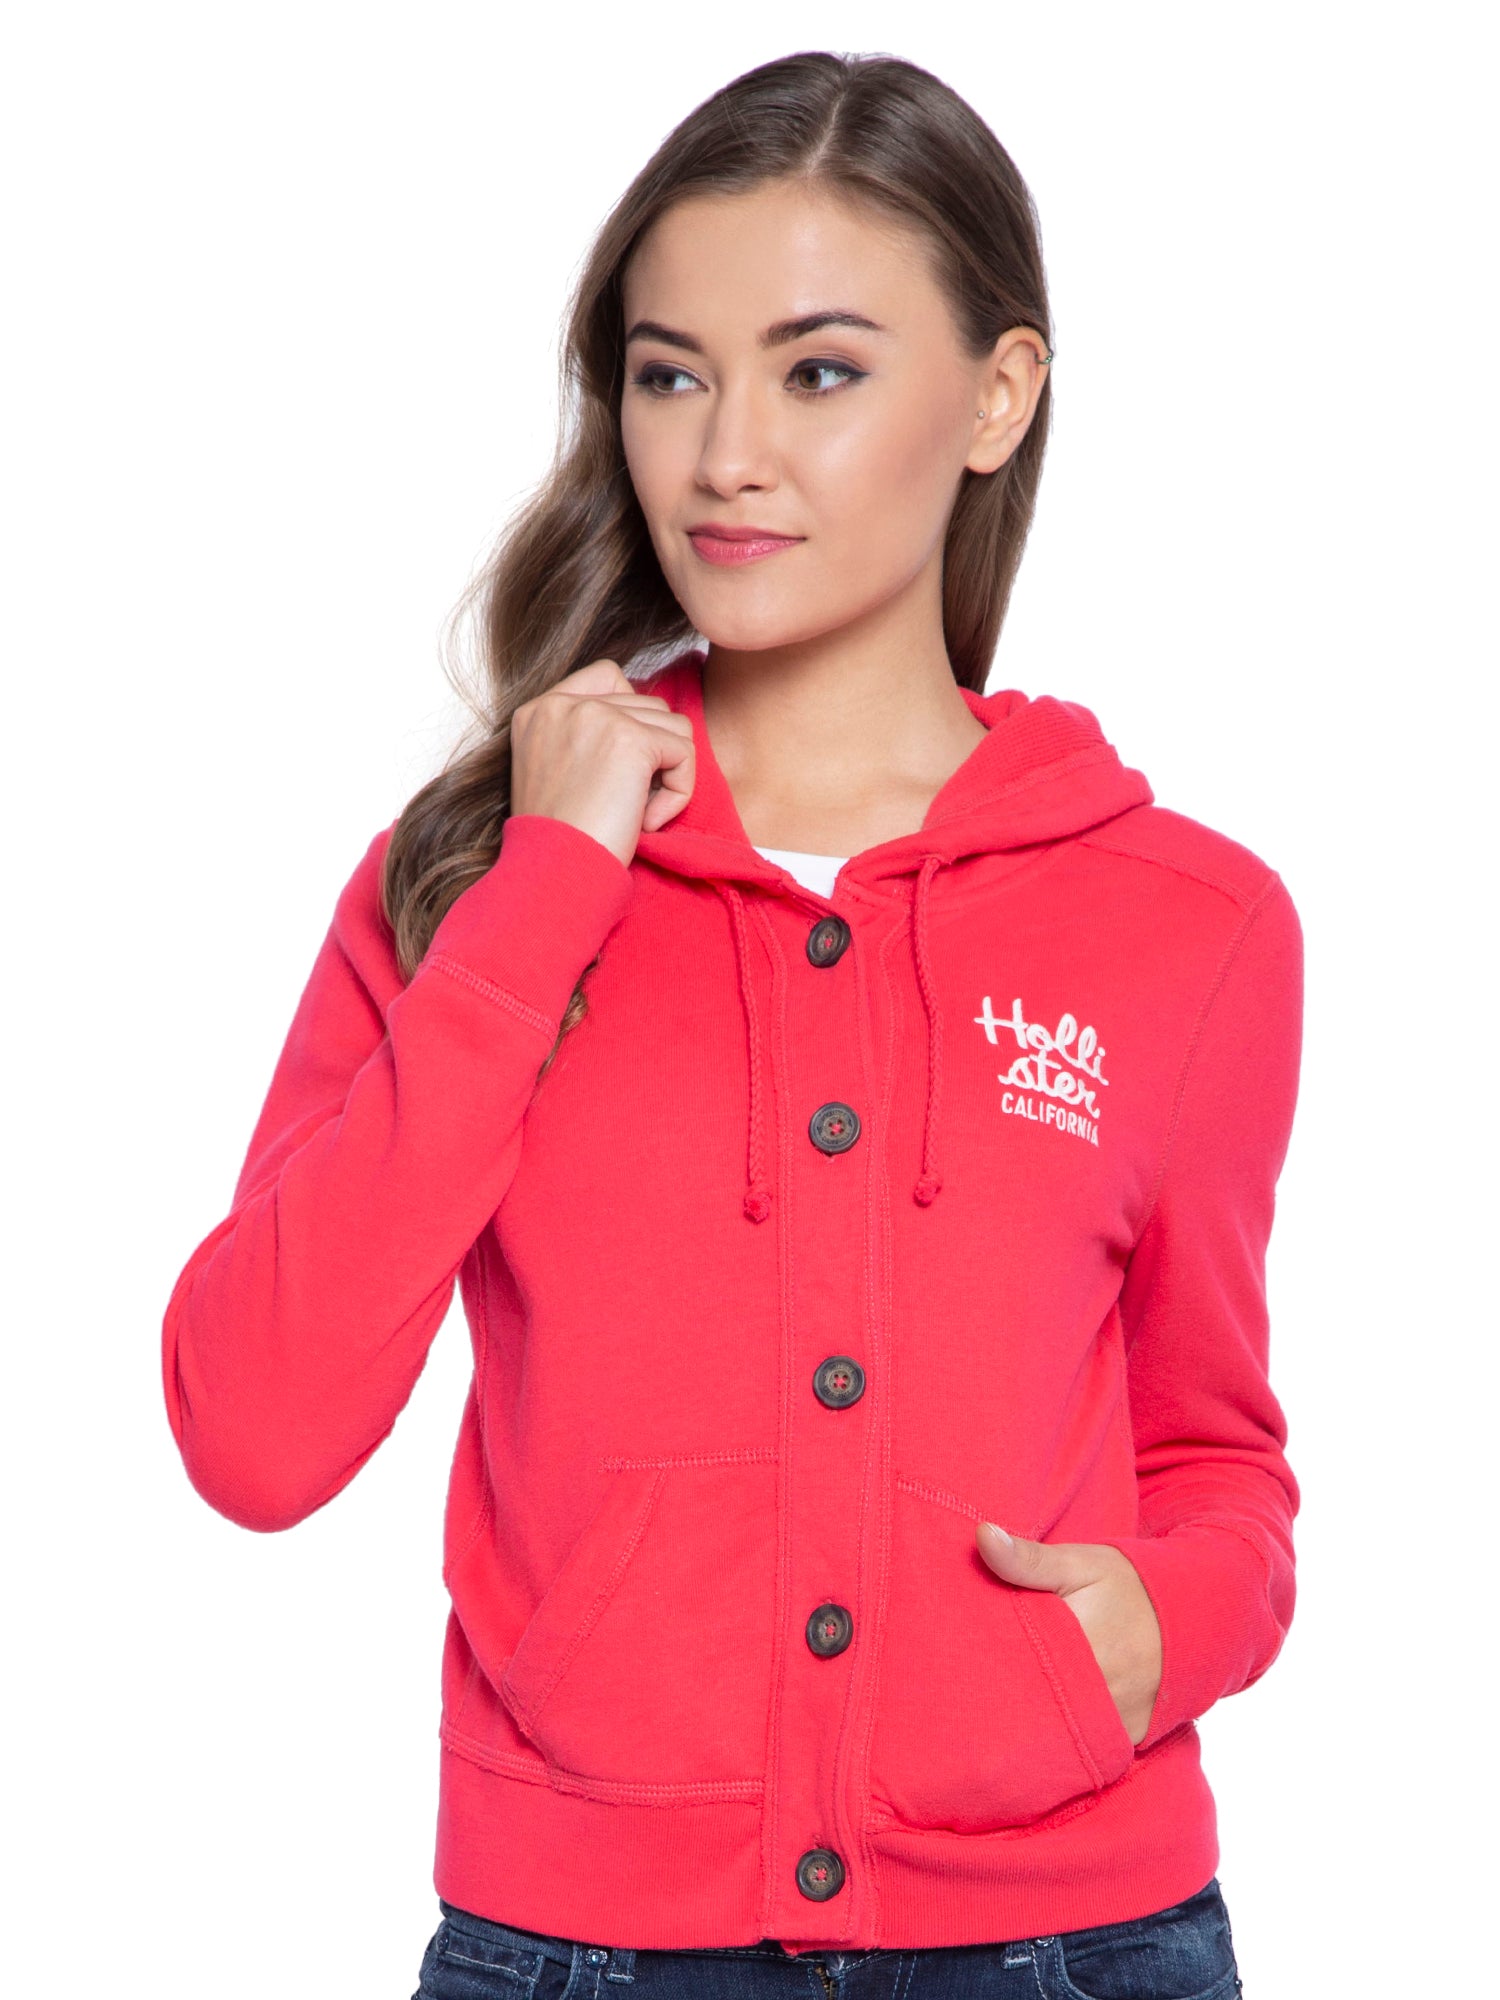 hollister red hoodie women's